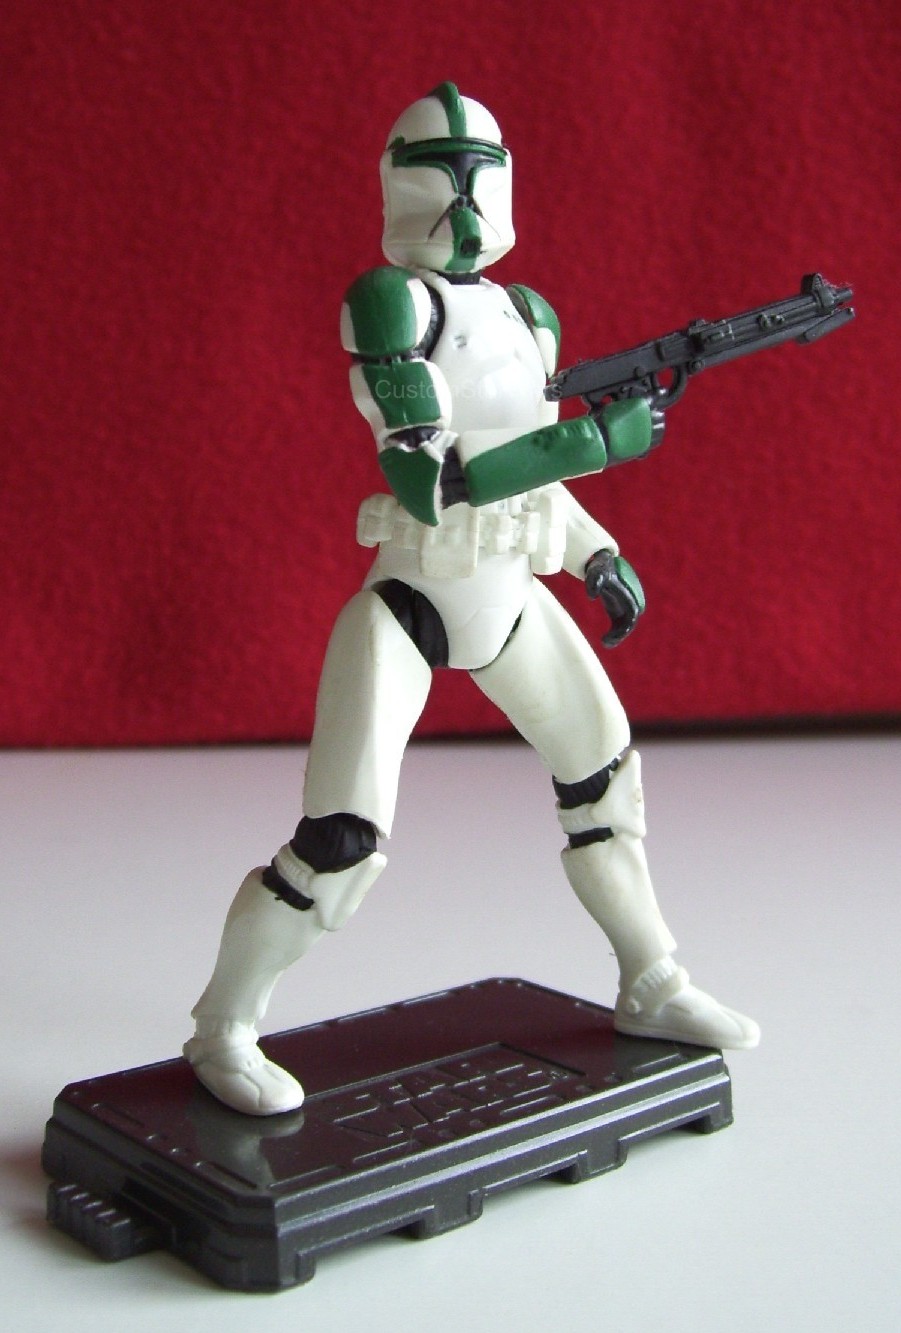 klón őrmester zöld custom figura féloldalról